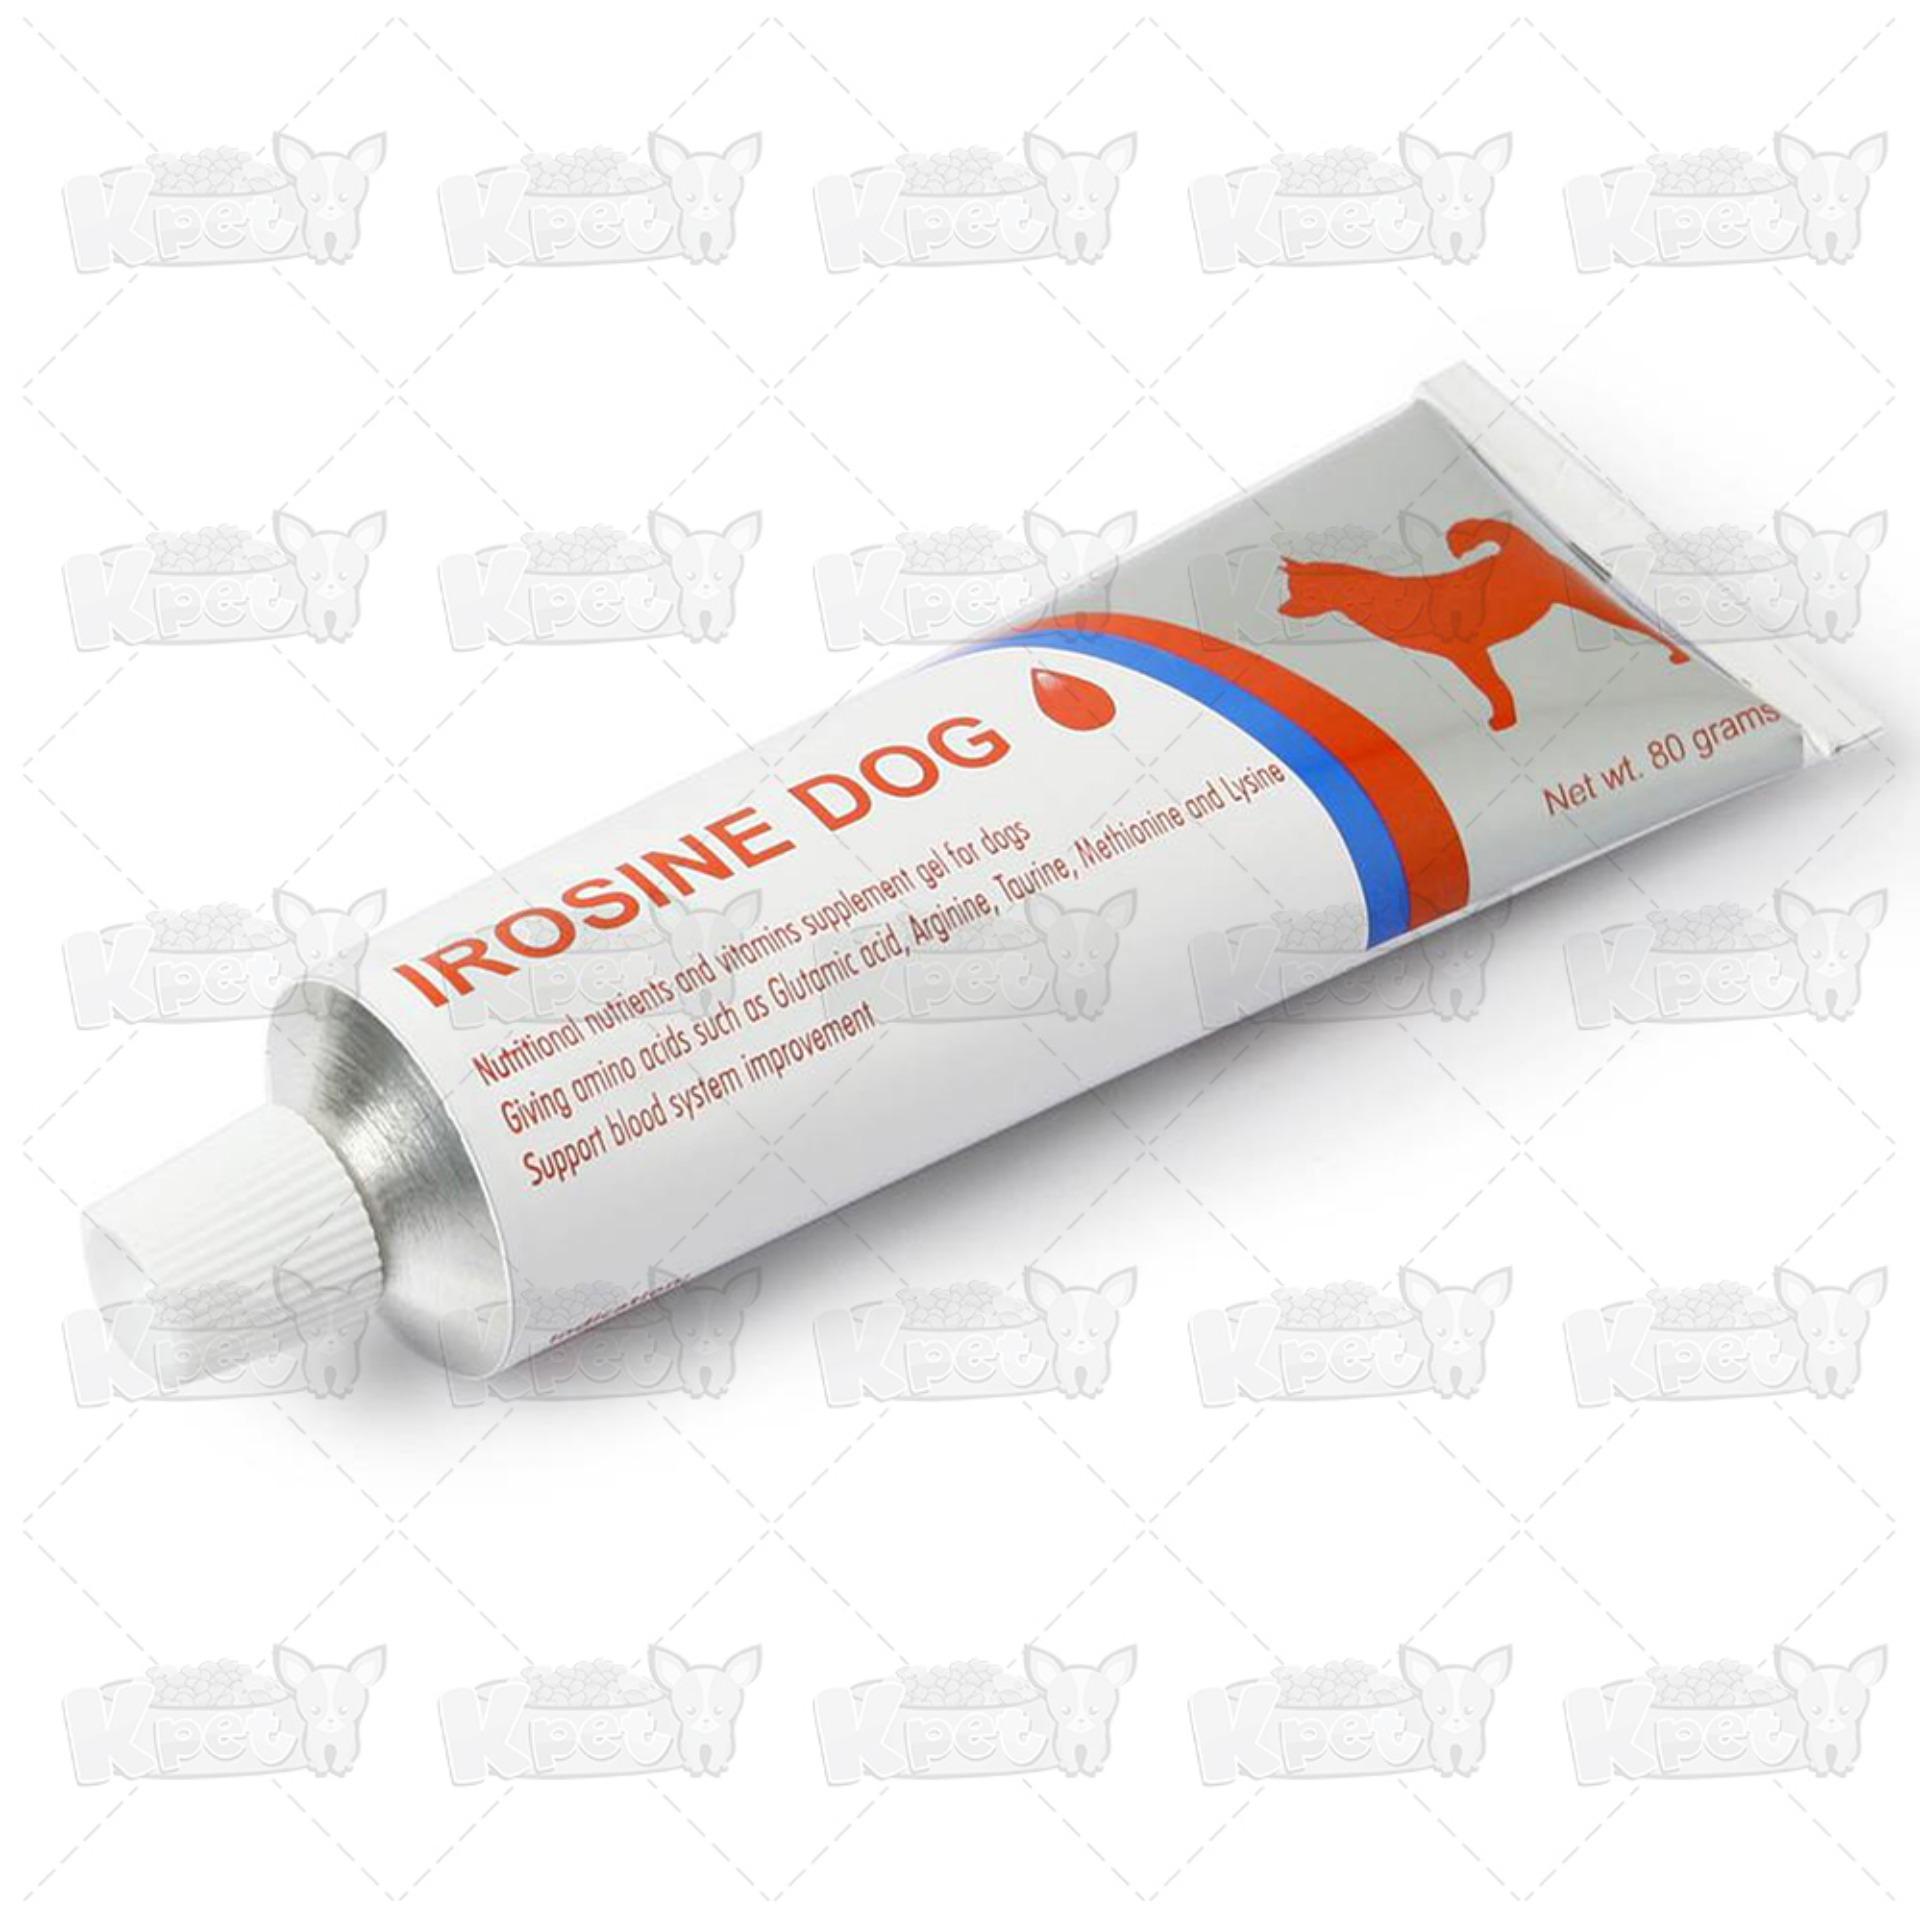 Irosine Dog 80 g. วิตามินบำรุงเลือดสุนัข อาหารเสริมสุนัข ป้องกันโรคโลหิตจาง สำหรับสุนัขทุกวัย (80 กรัม/หลอด)